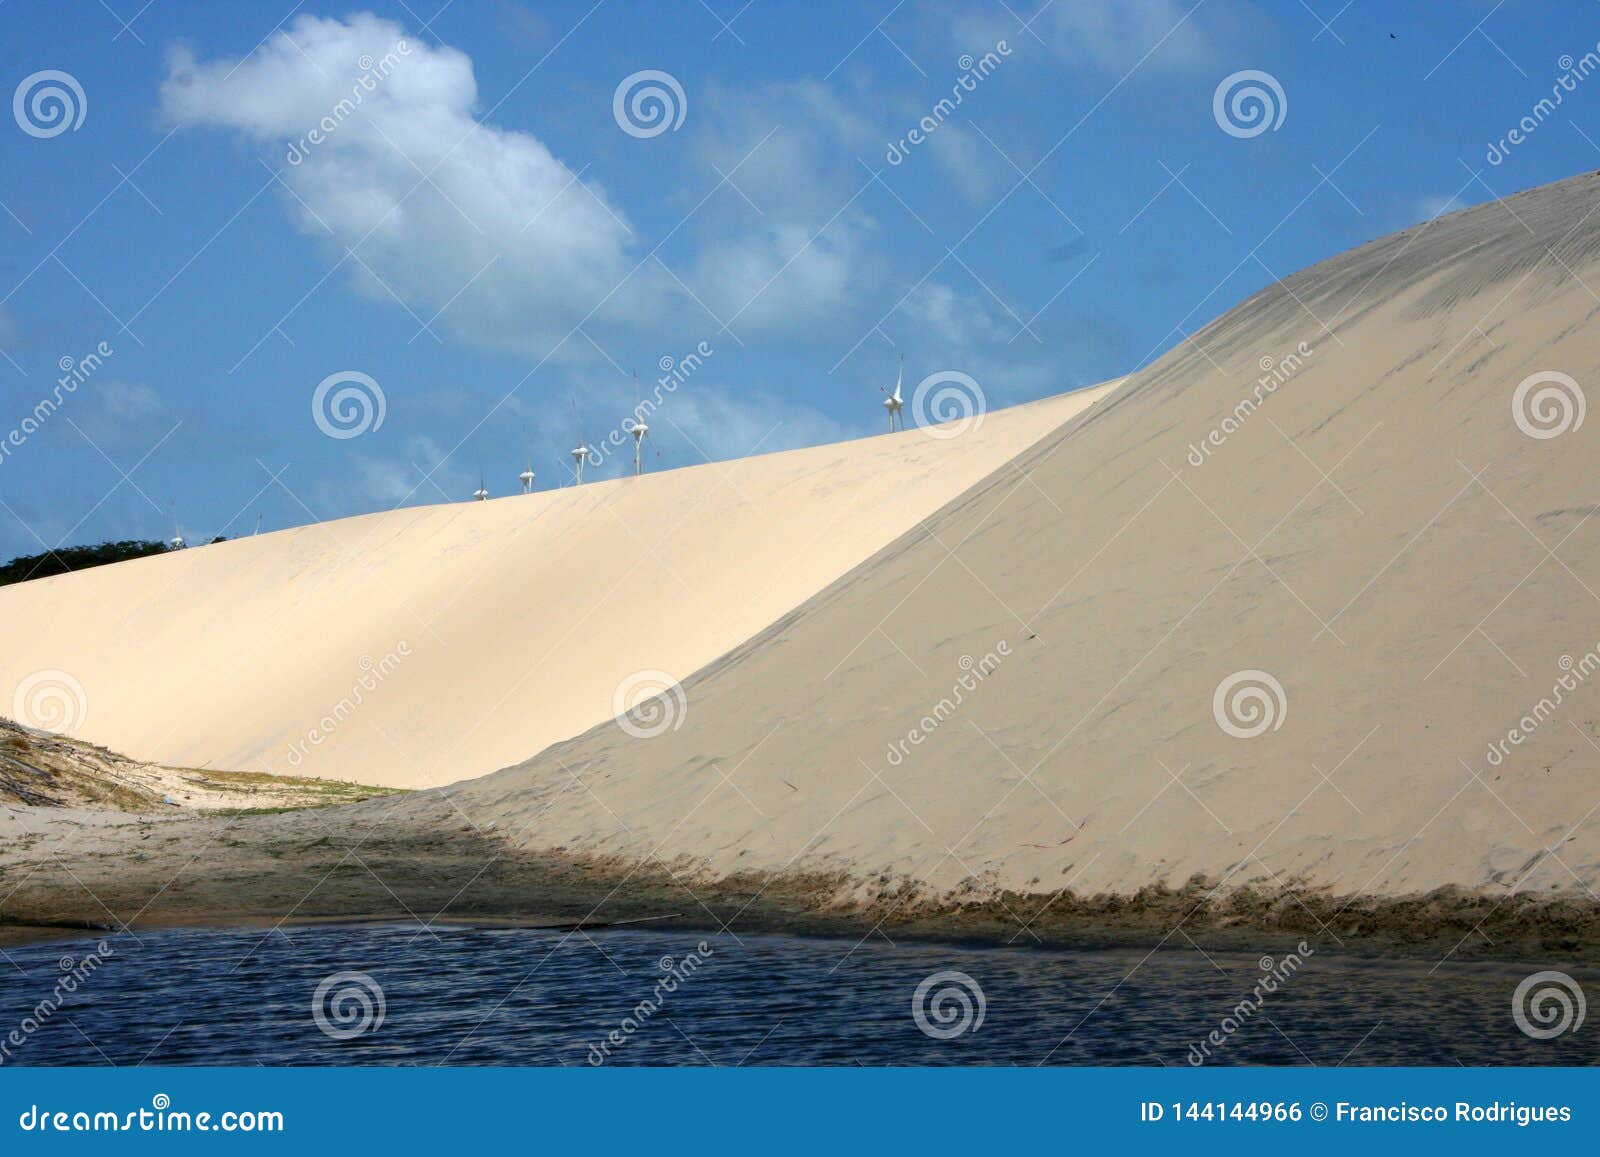 dunes on the beach of canoa quebrada